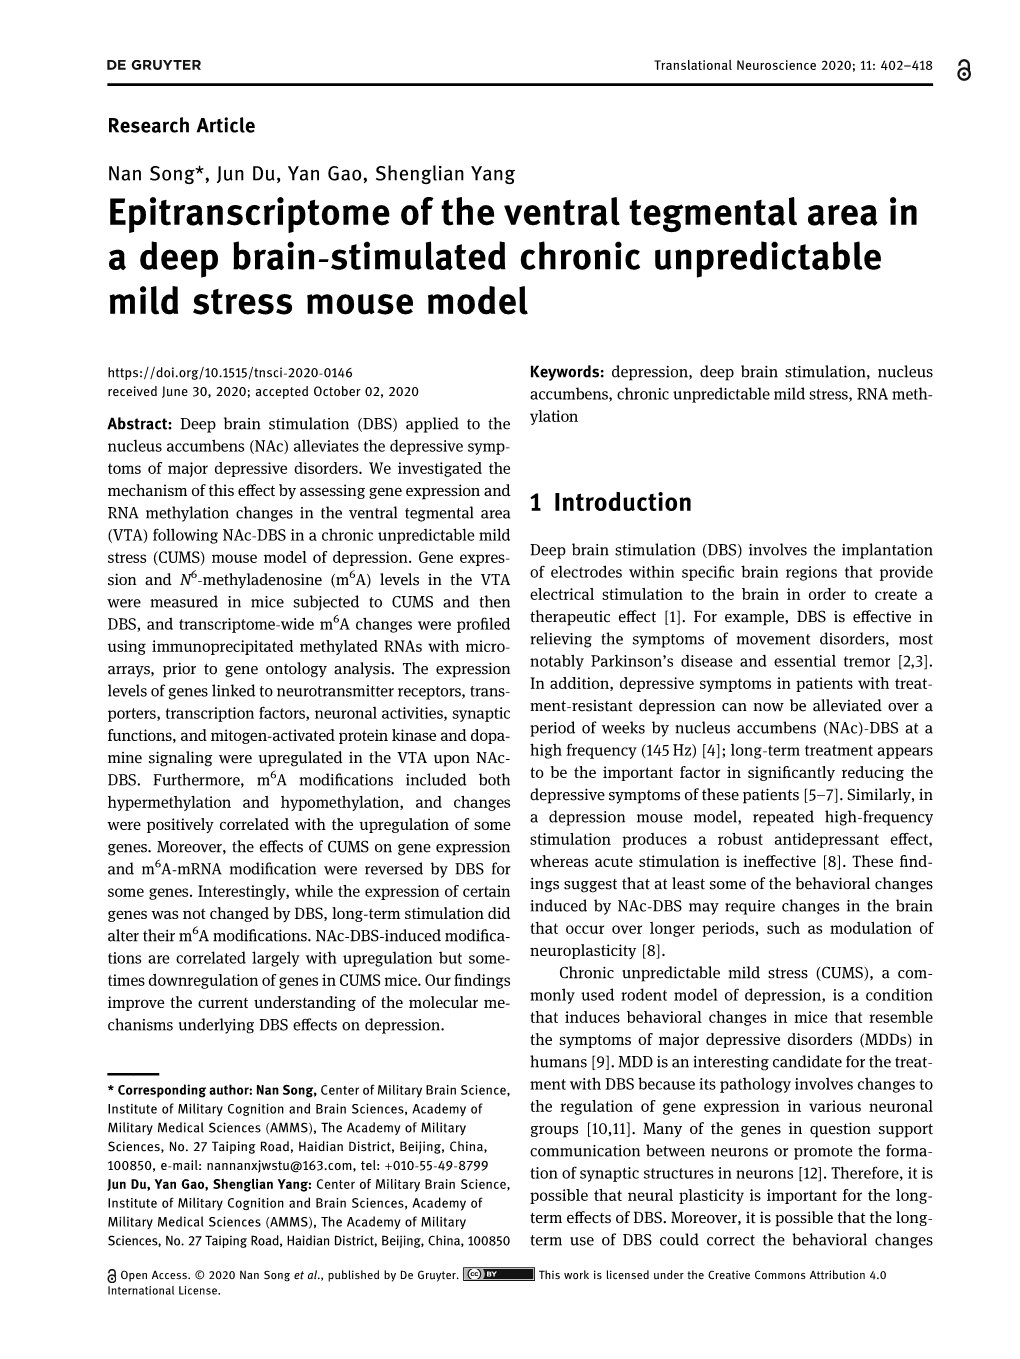 Epitranscriptome of the Ventral Tegmental Area in a Deep Brain-Stimulated Chronic Unpredictable Mild Stress Mouse Model